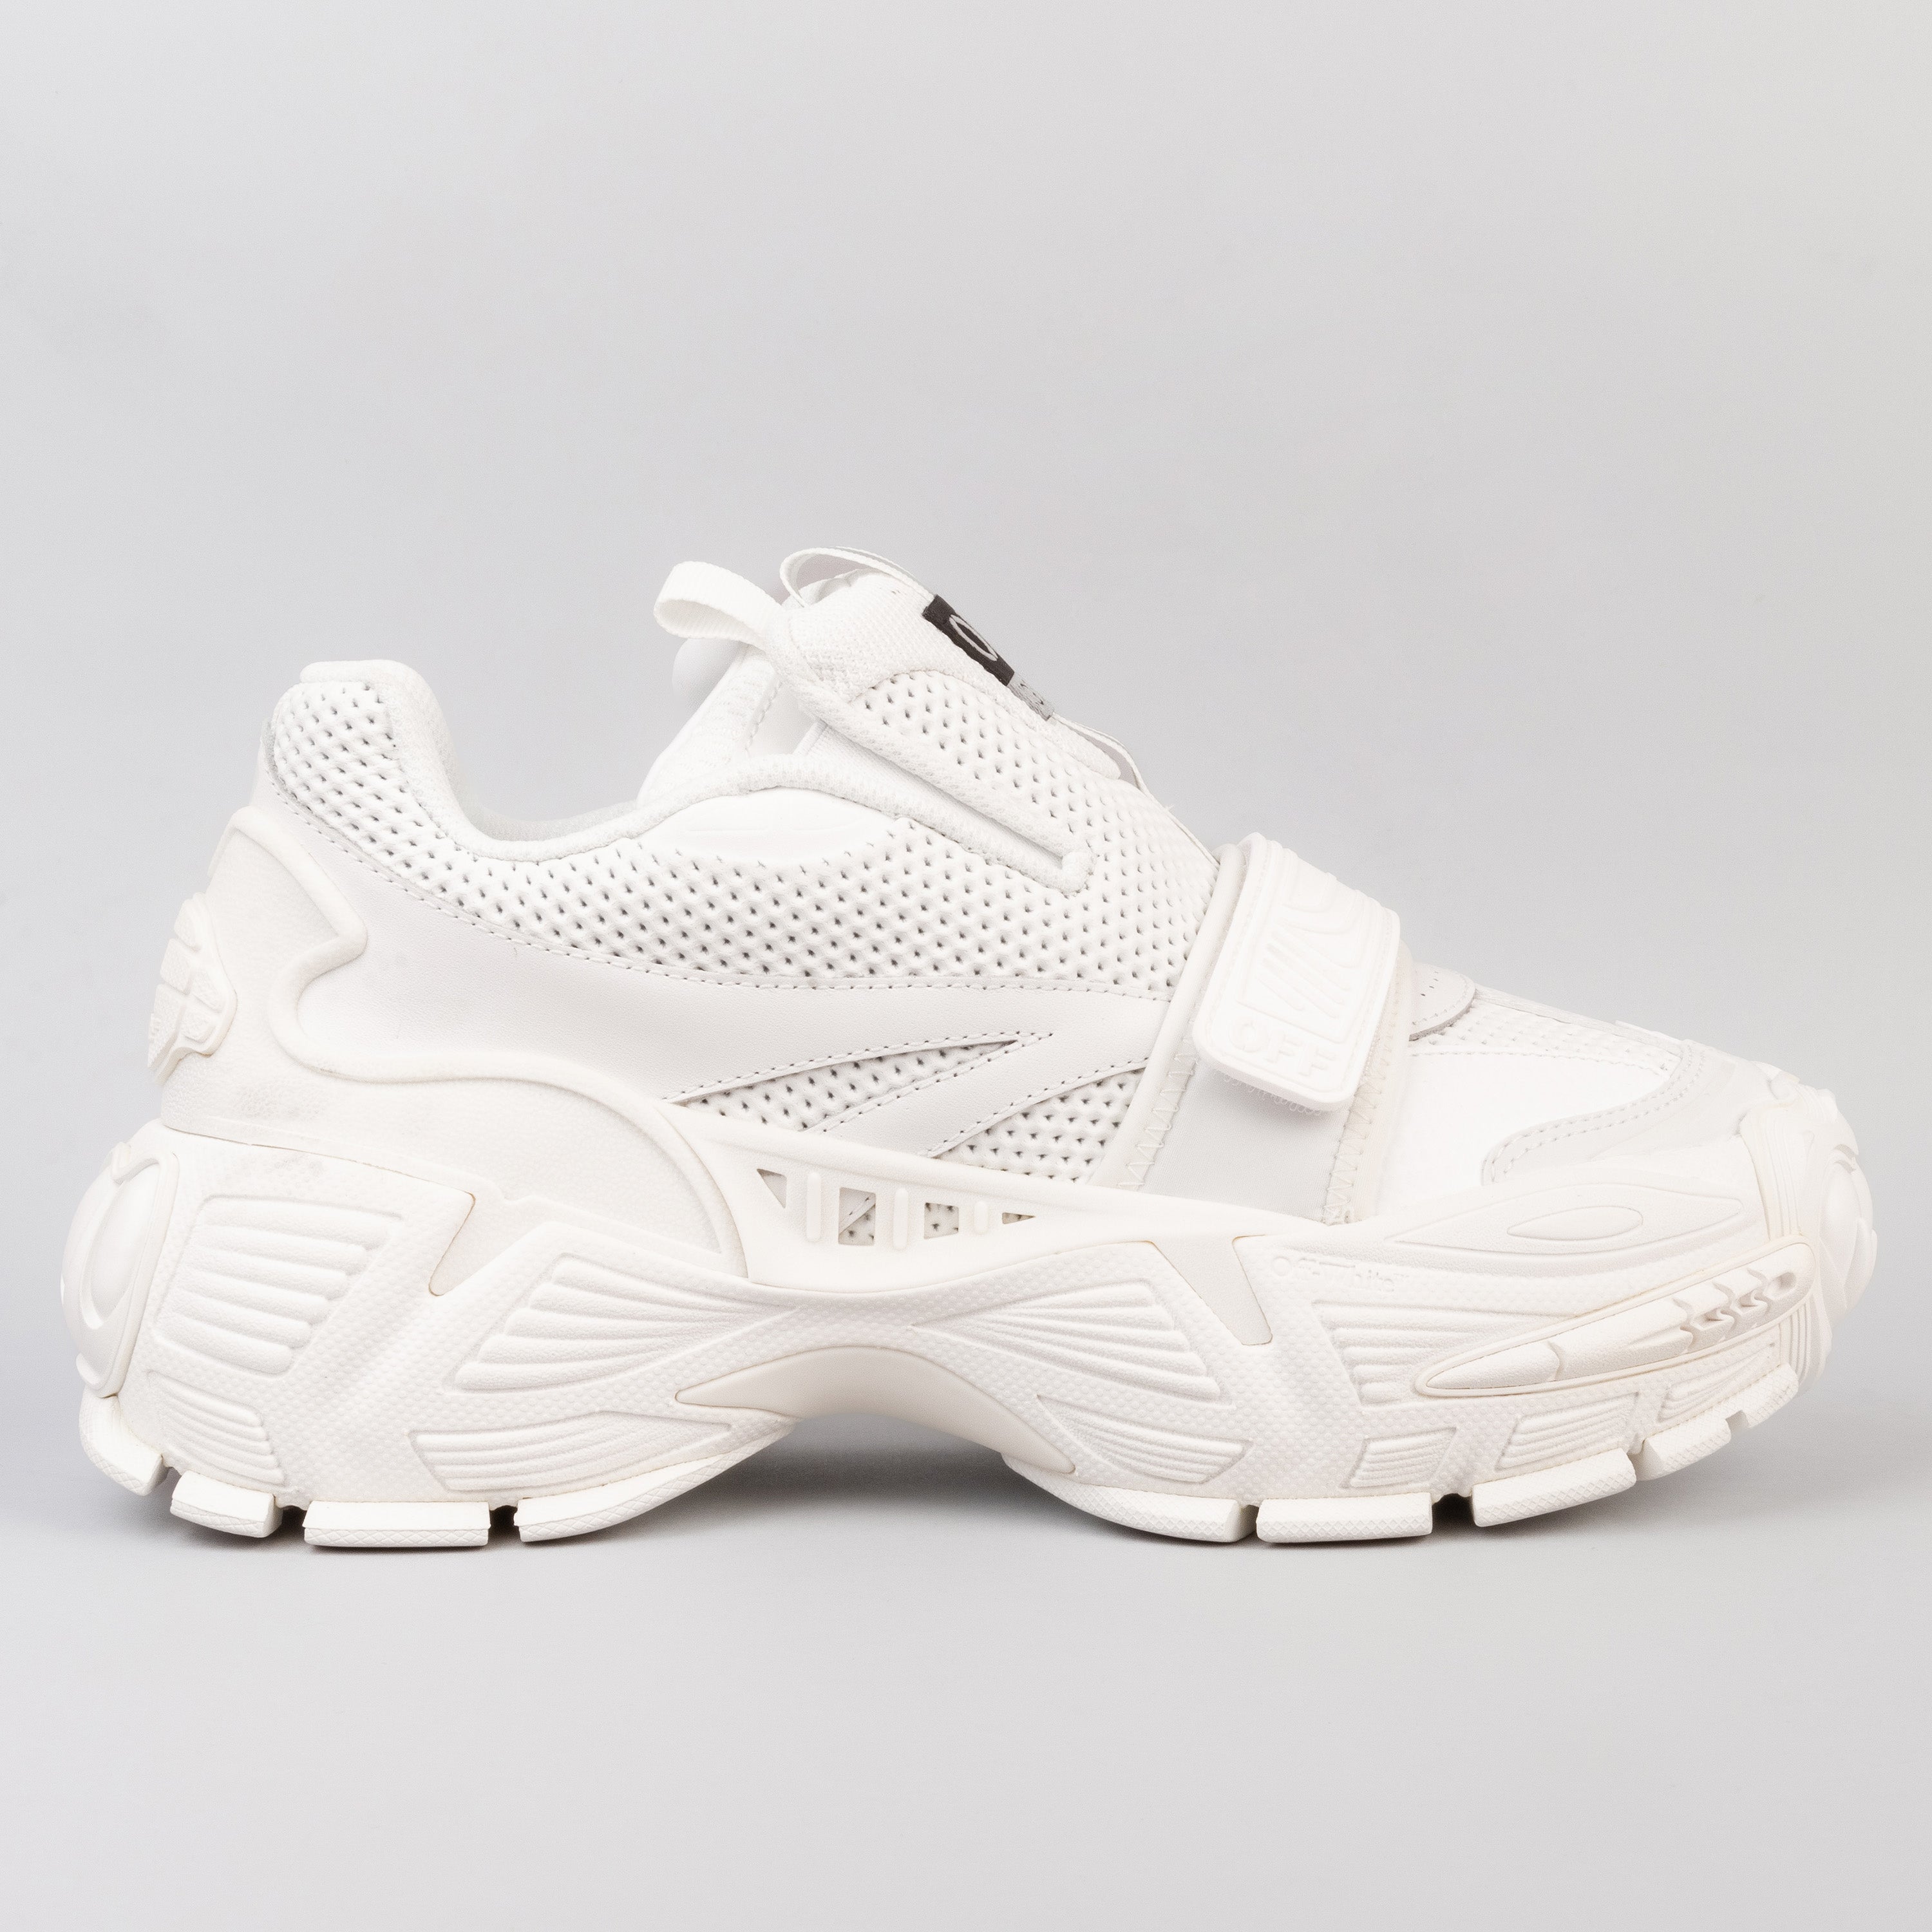 Sneakers Blanco Off-White Blanco Glove Slip On